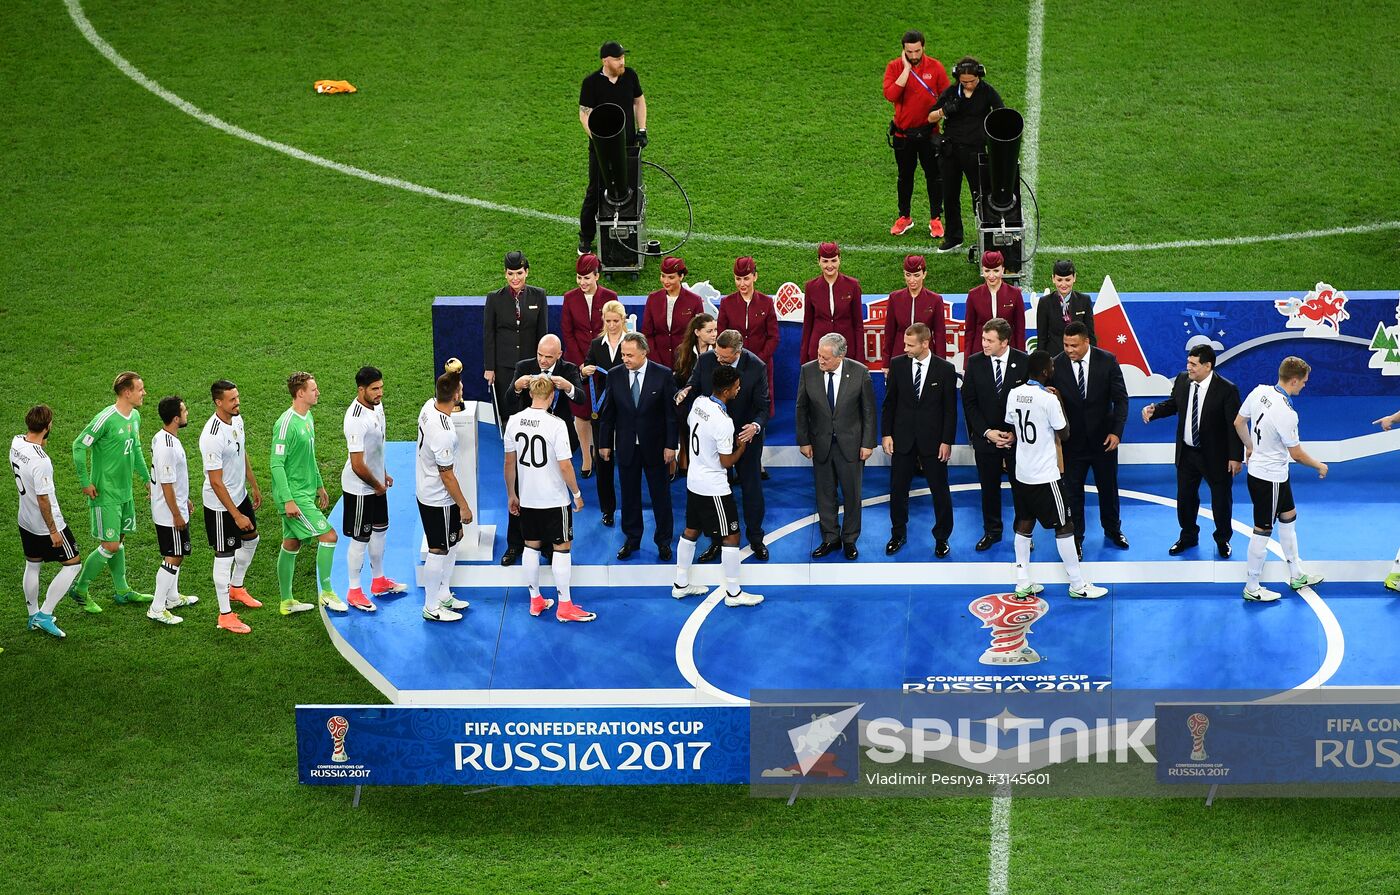 Football. 2017 FIFA Confederations Cup. Medal ceremony